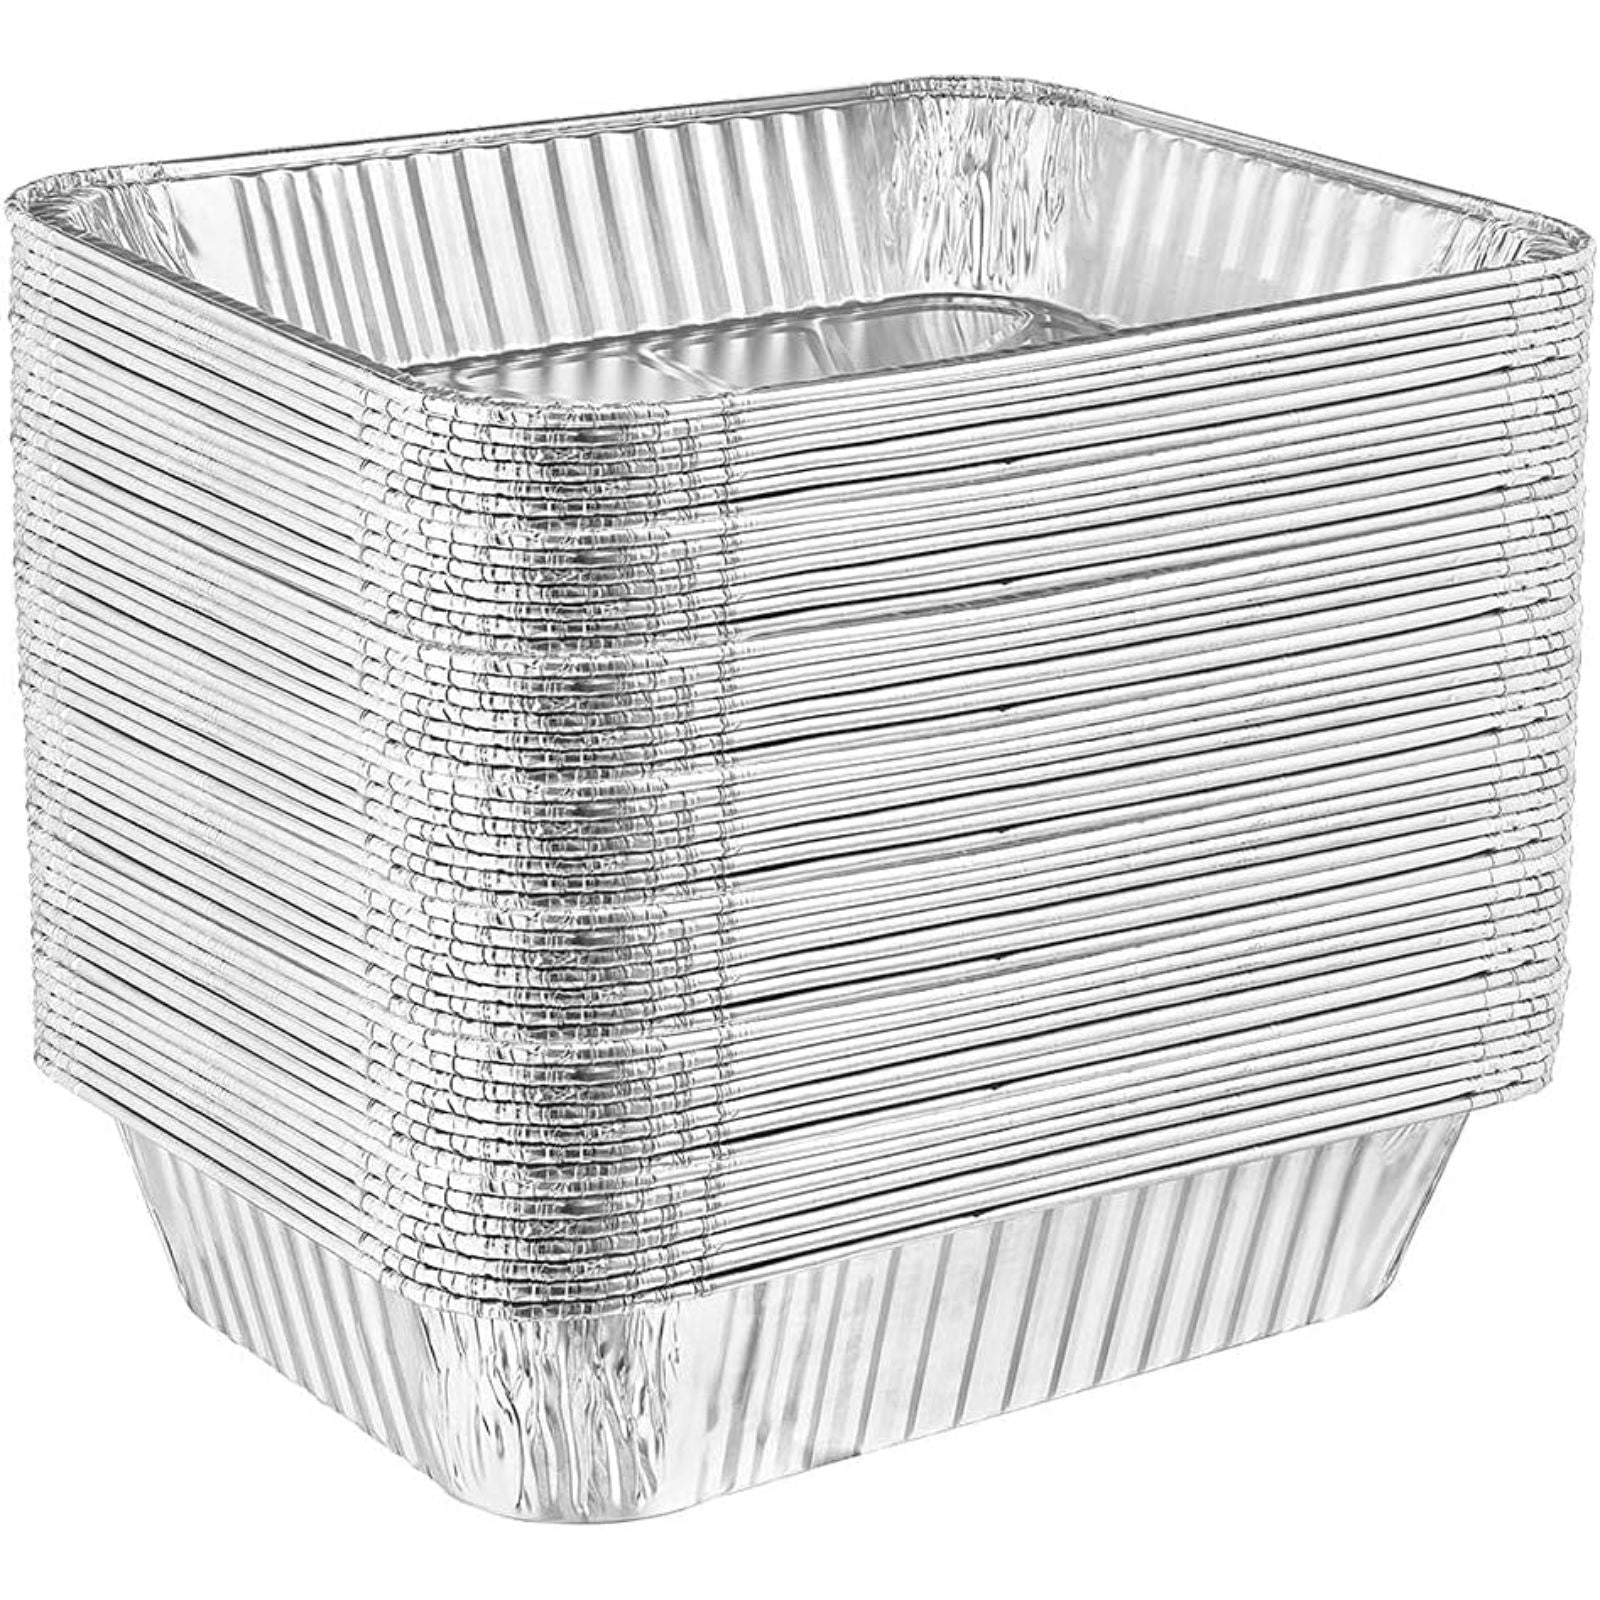 Disposable Aluminum Giant Lasagna Baking Pan 14.2 X 10.63 X 2.94 Inches Disposable VeZee   